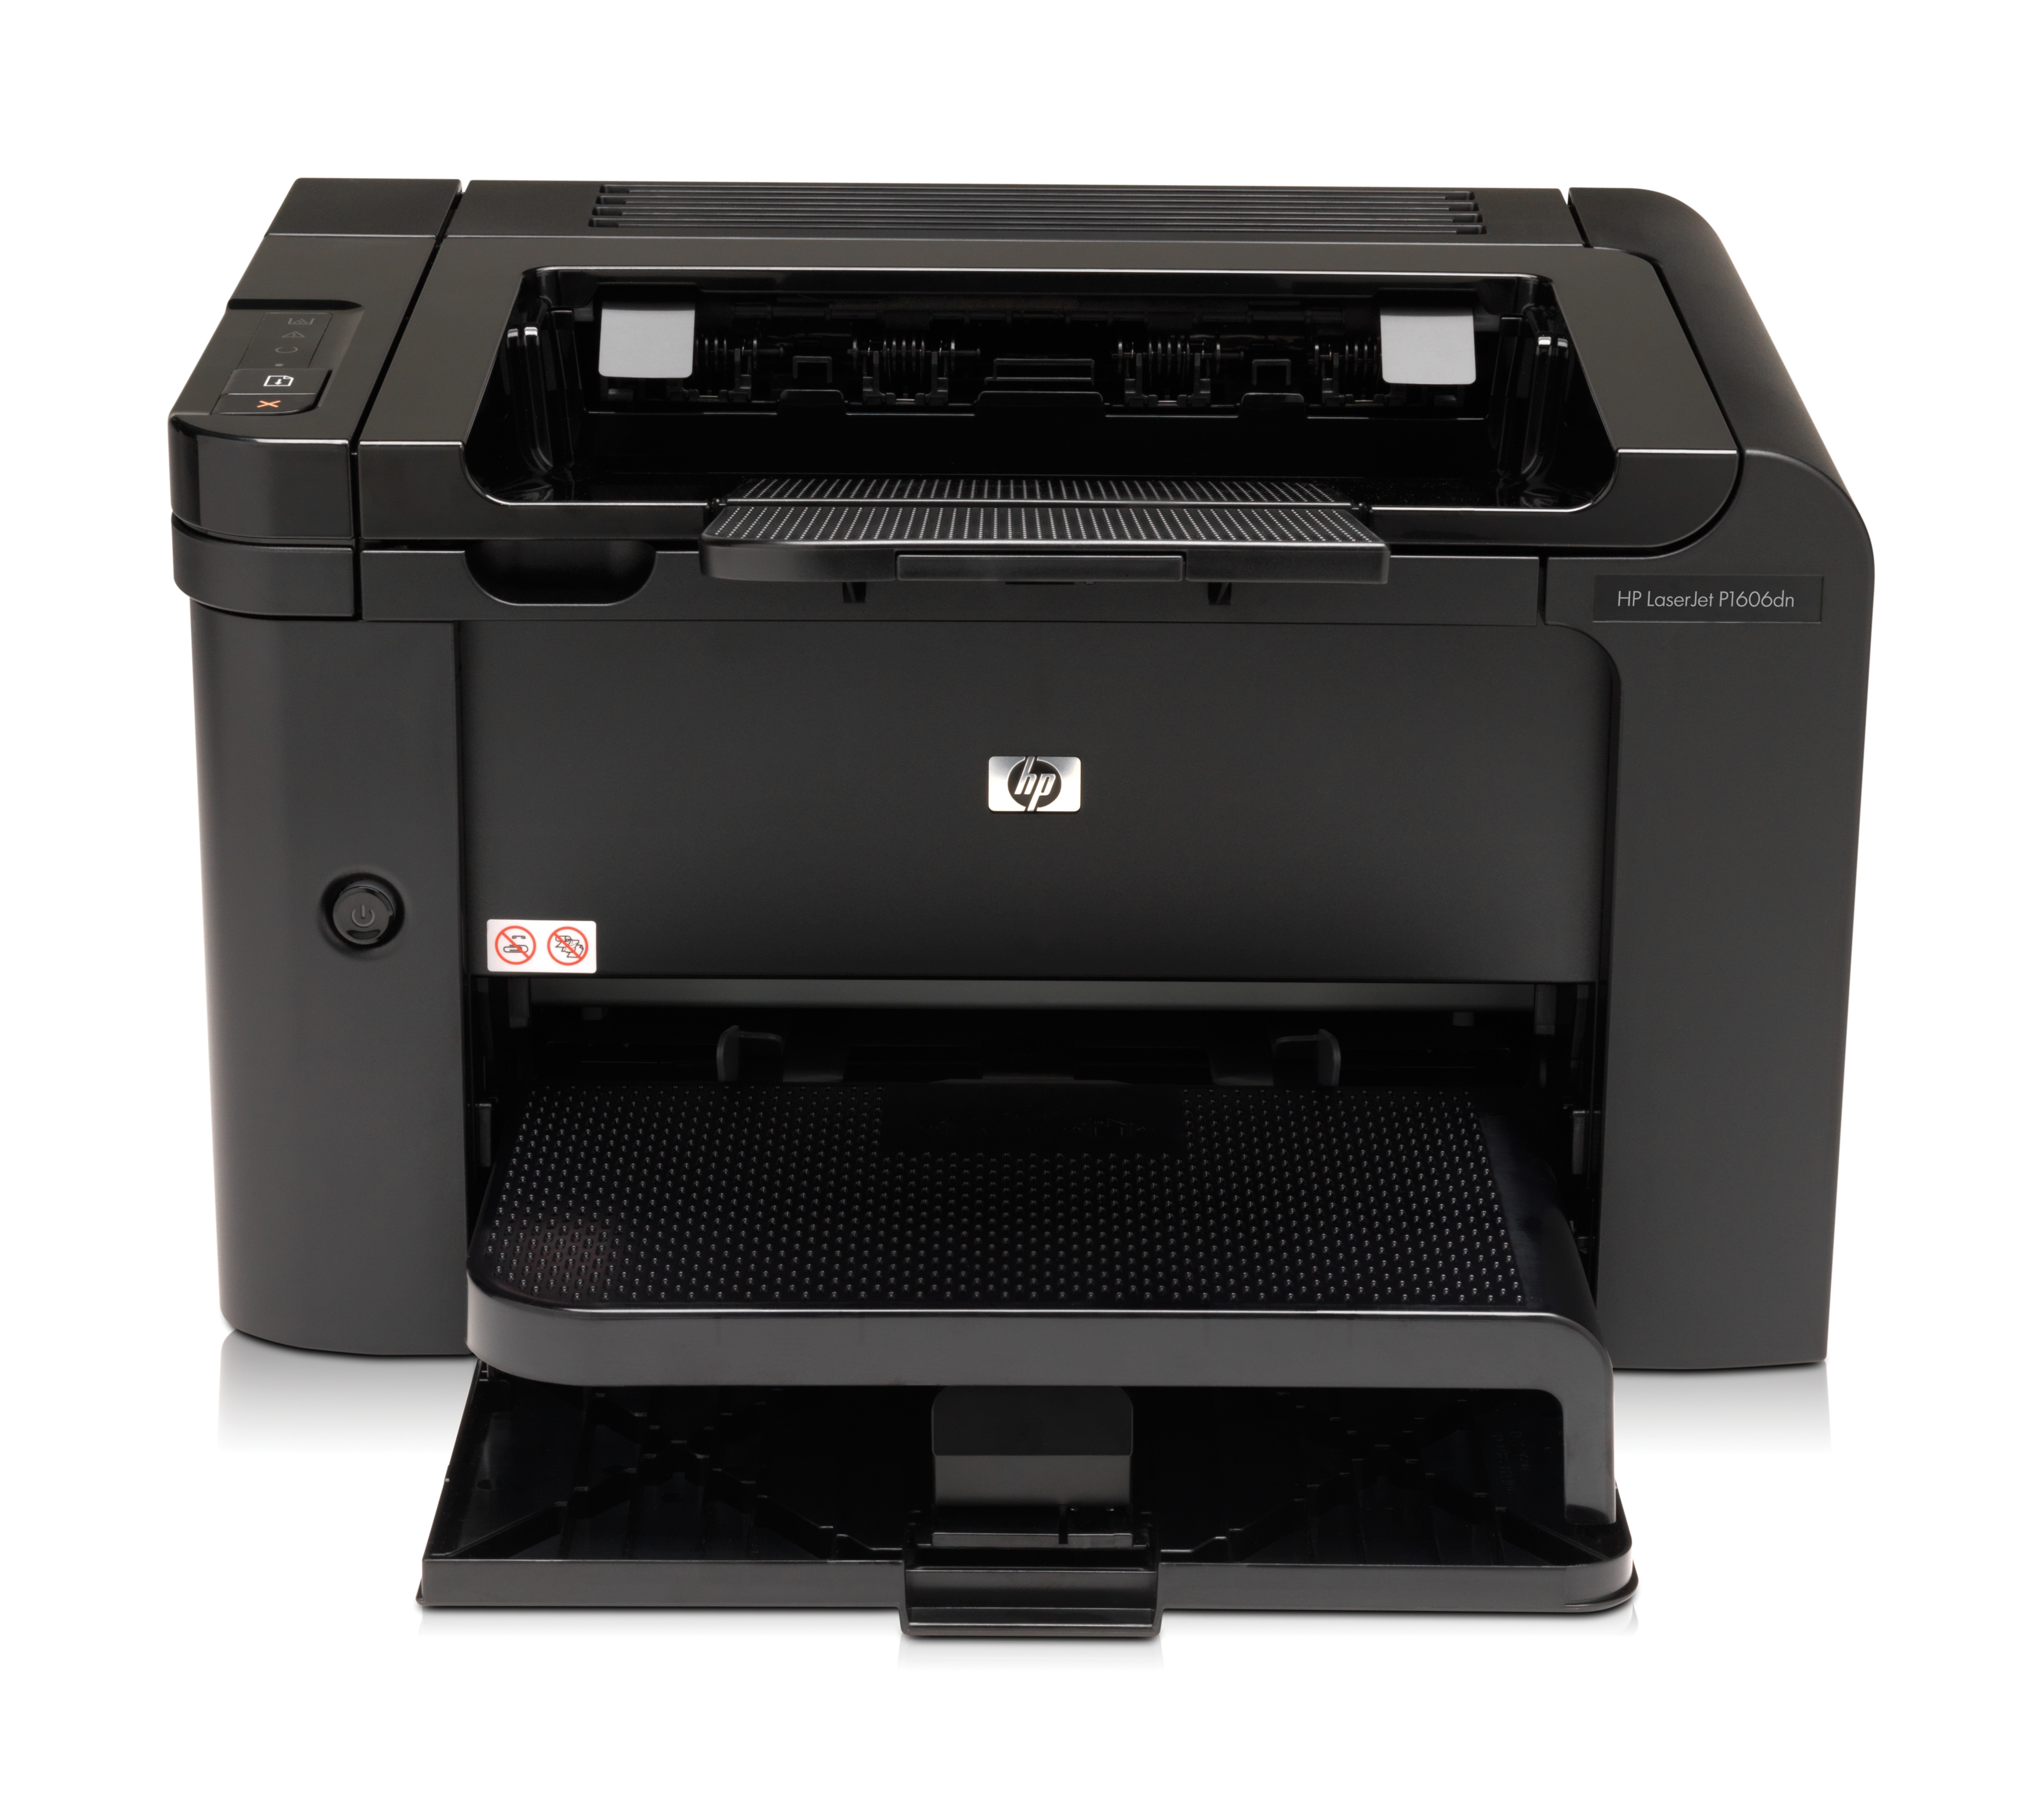 hp laserjet p1606dn printer driver for mac